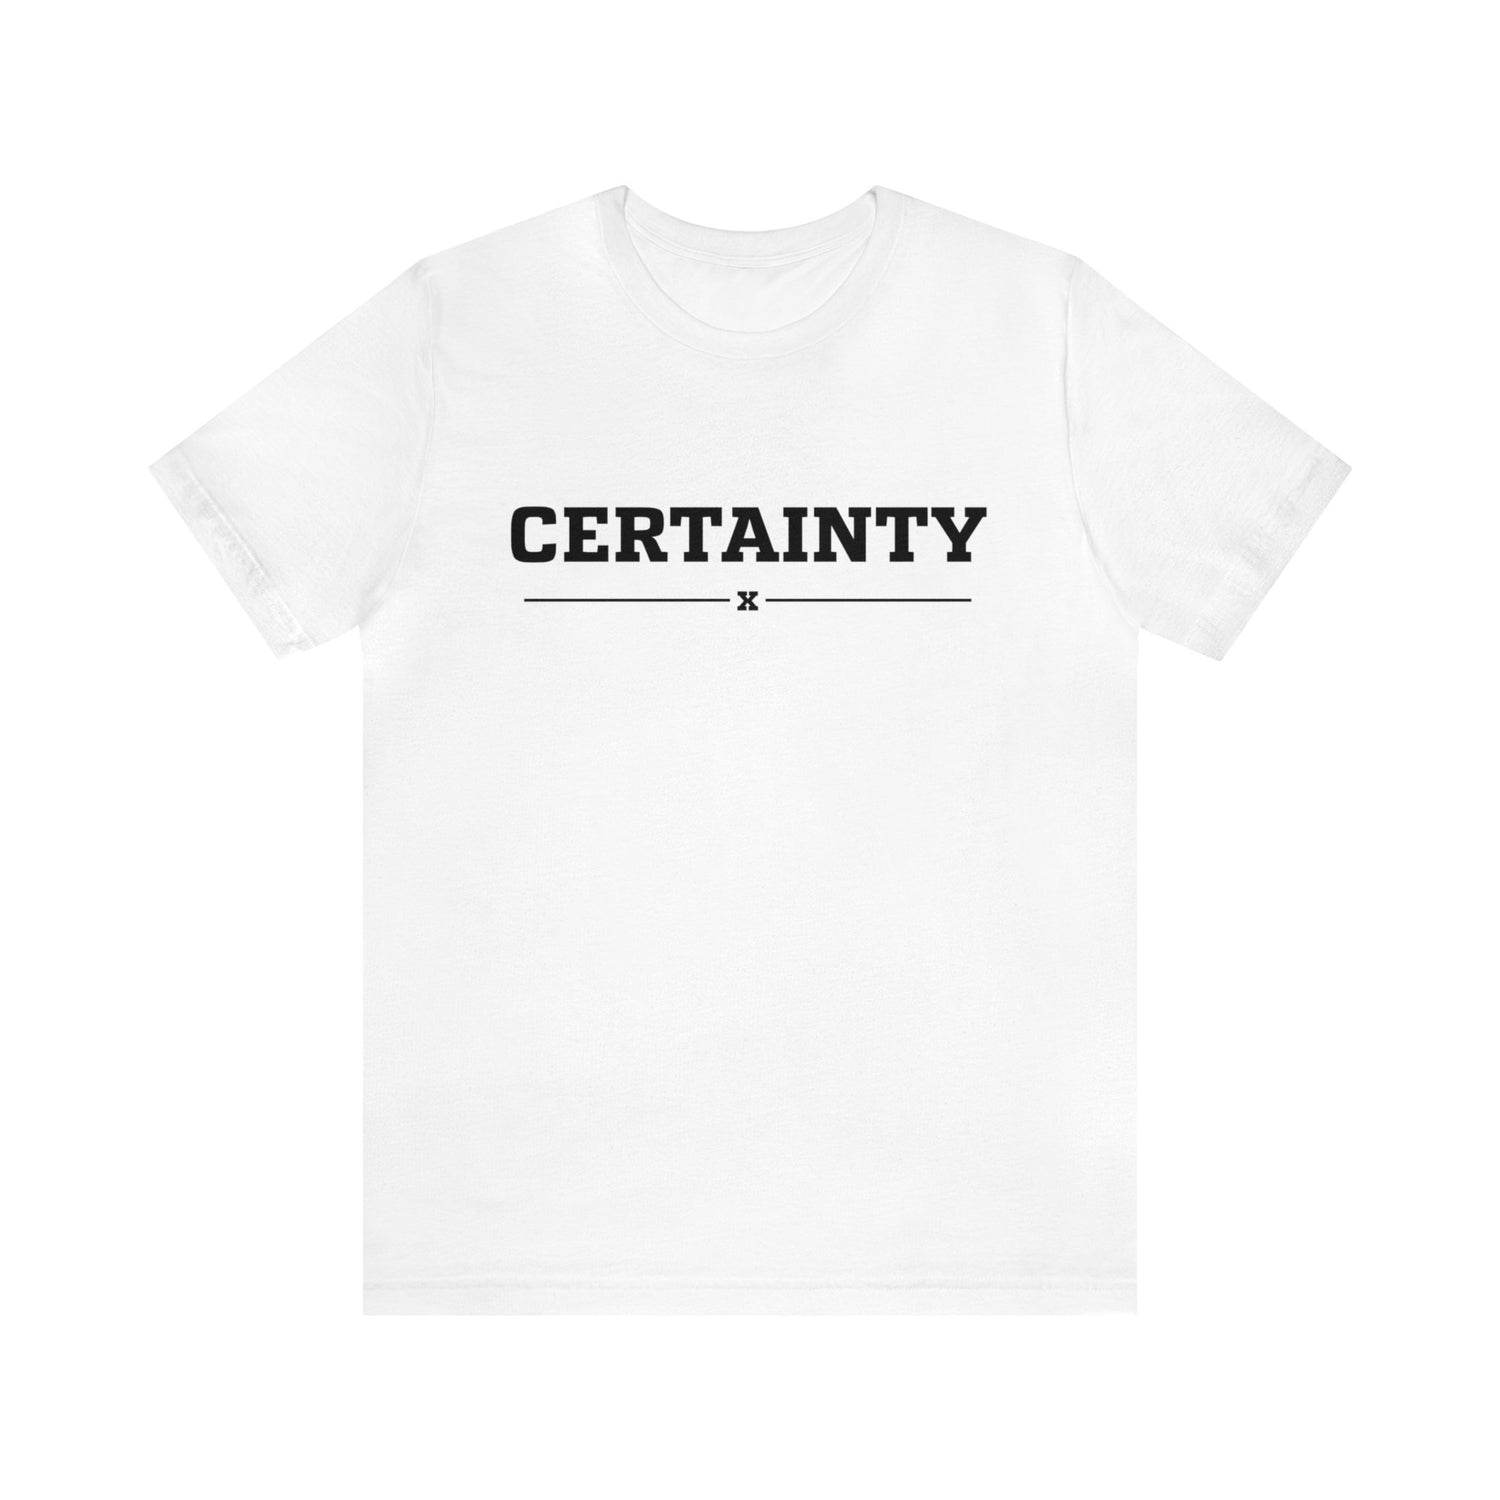 Certainty Tee